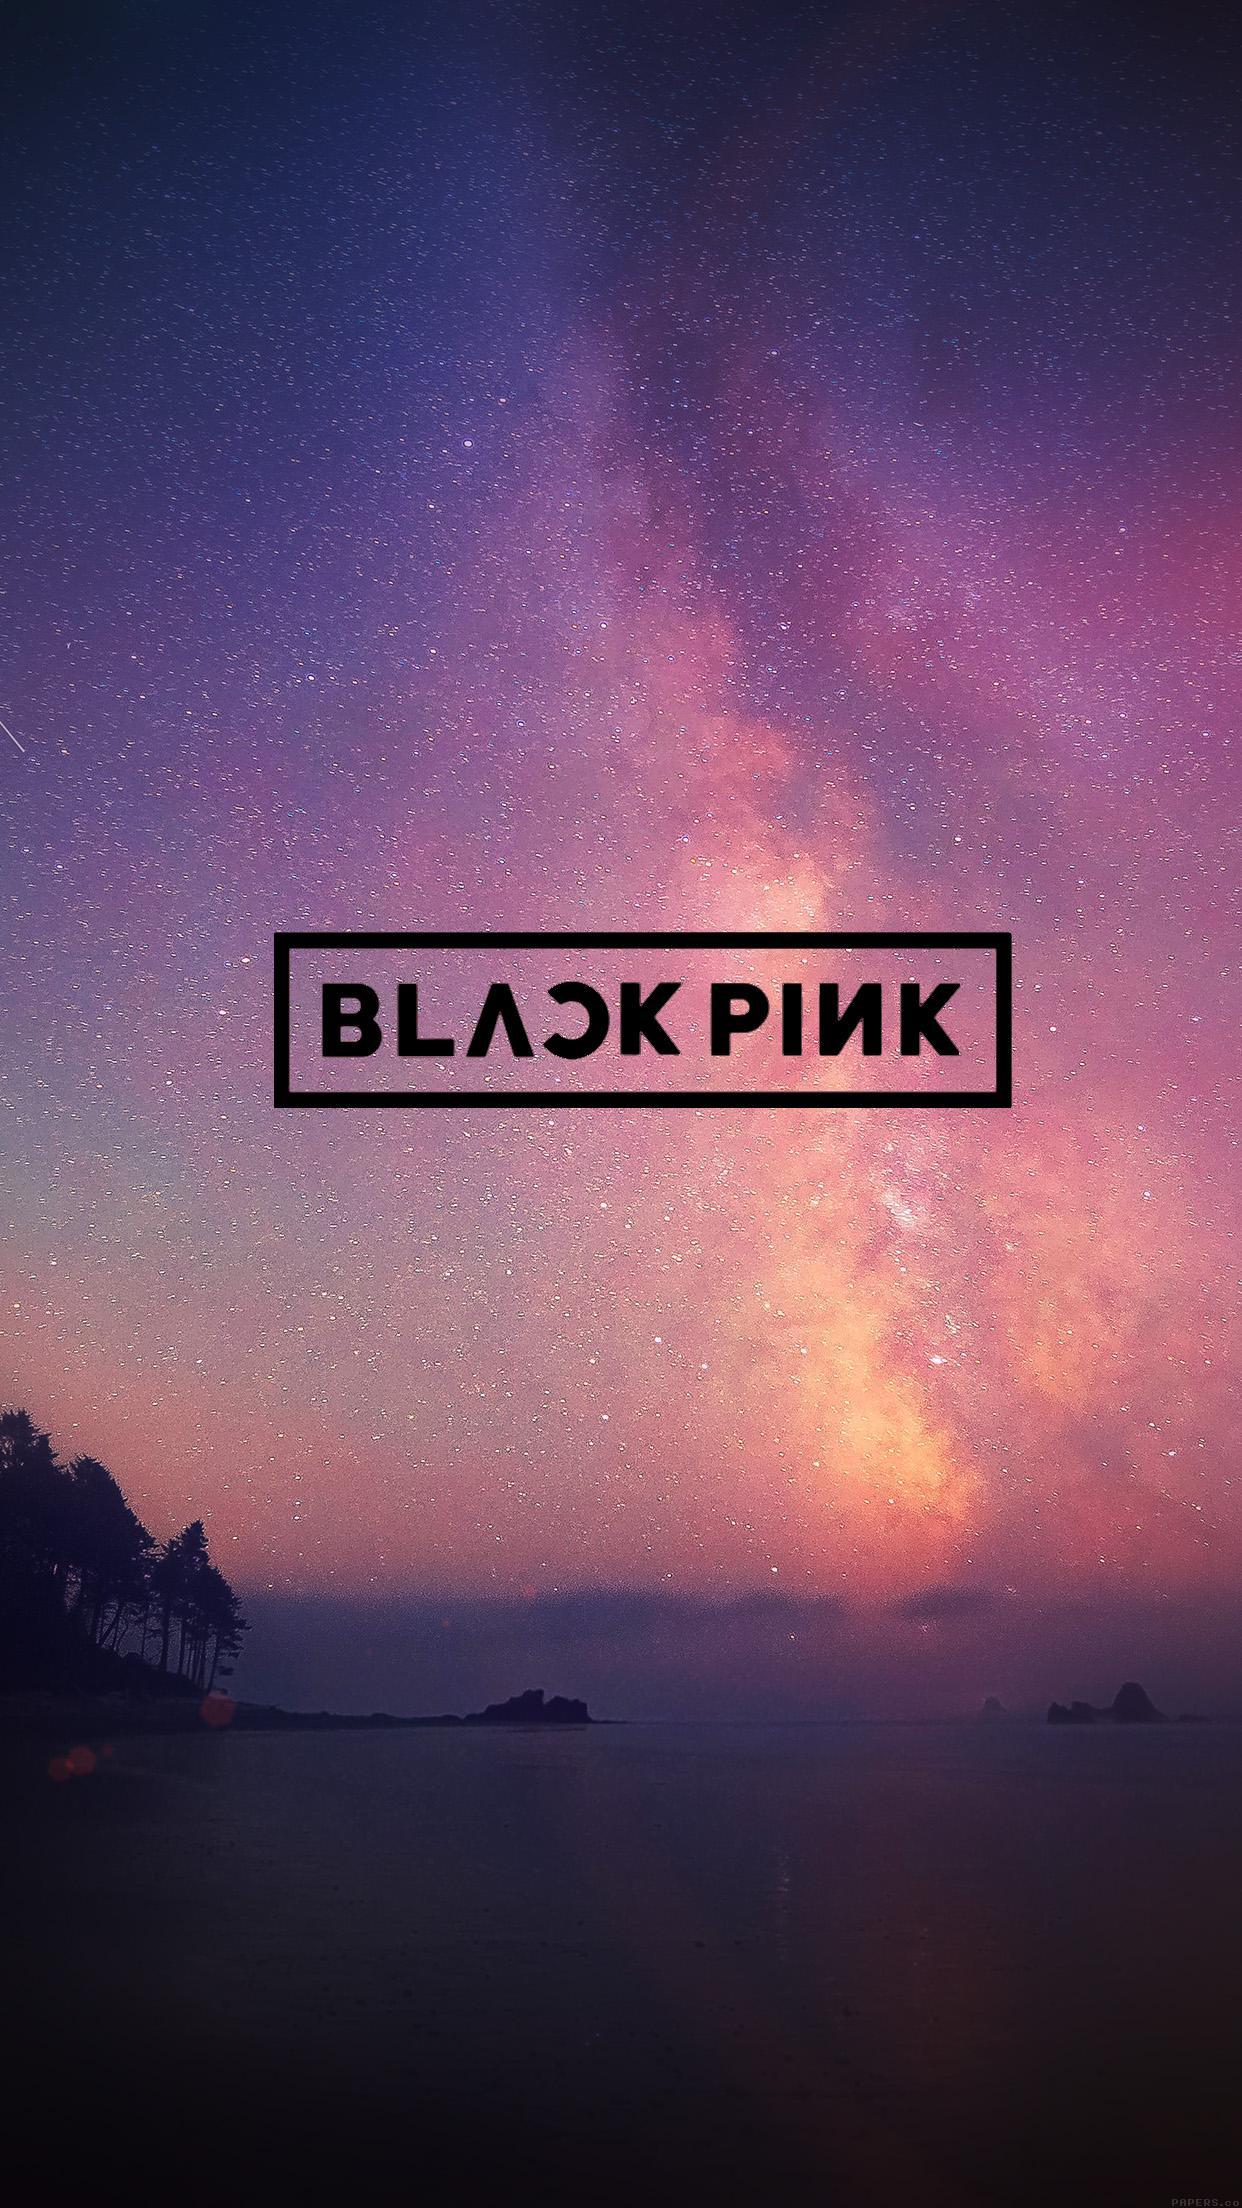 Black Pink Logo - BlackPink Logo Phone Wallpaper - Album on Imgur